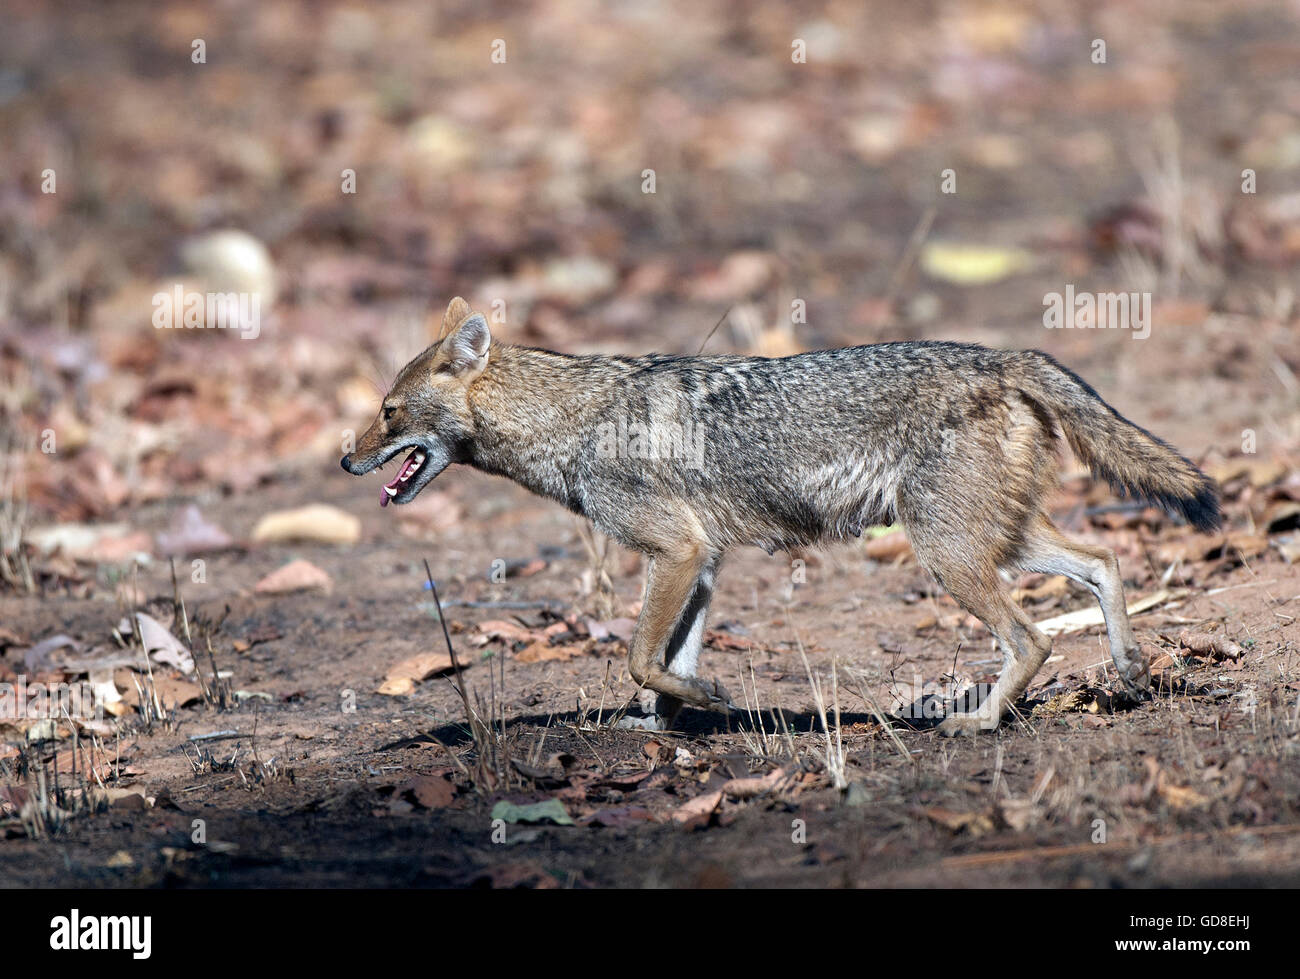 The image of Indian Jackal ( Canis aureus indicus ) was taken in Bandavgarh national park, India Stock Photo